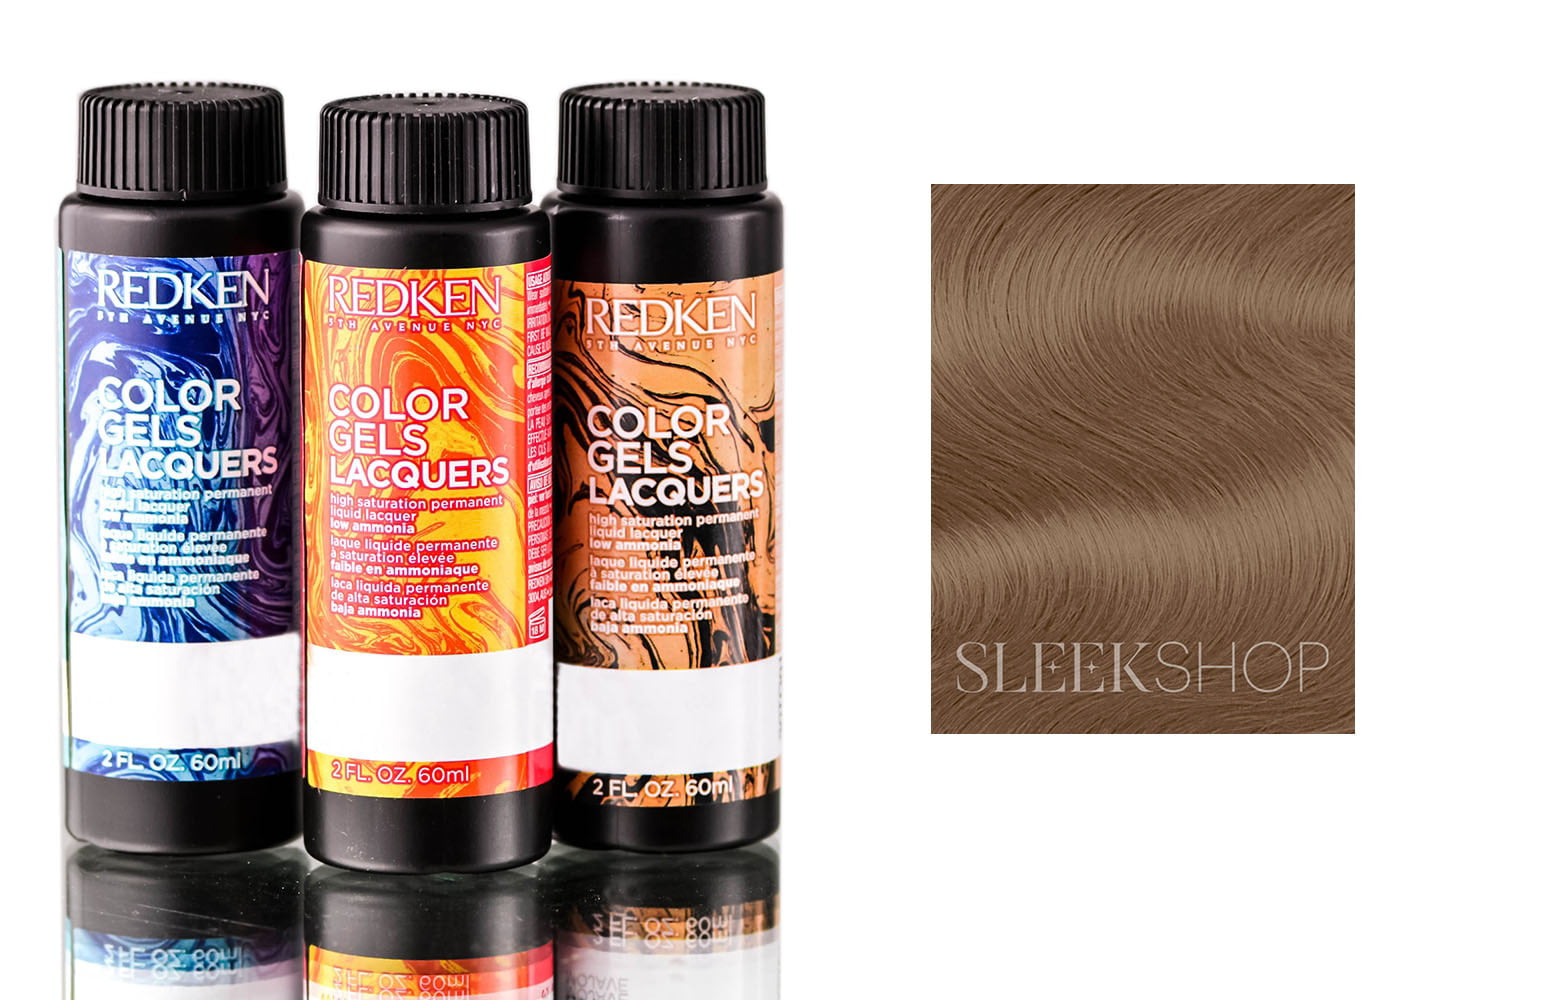 Redken - Redken Hair Color Gel Lacquers - 5NG Caramel - Walmart.com.